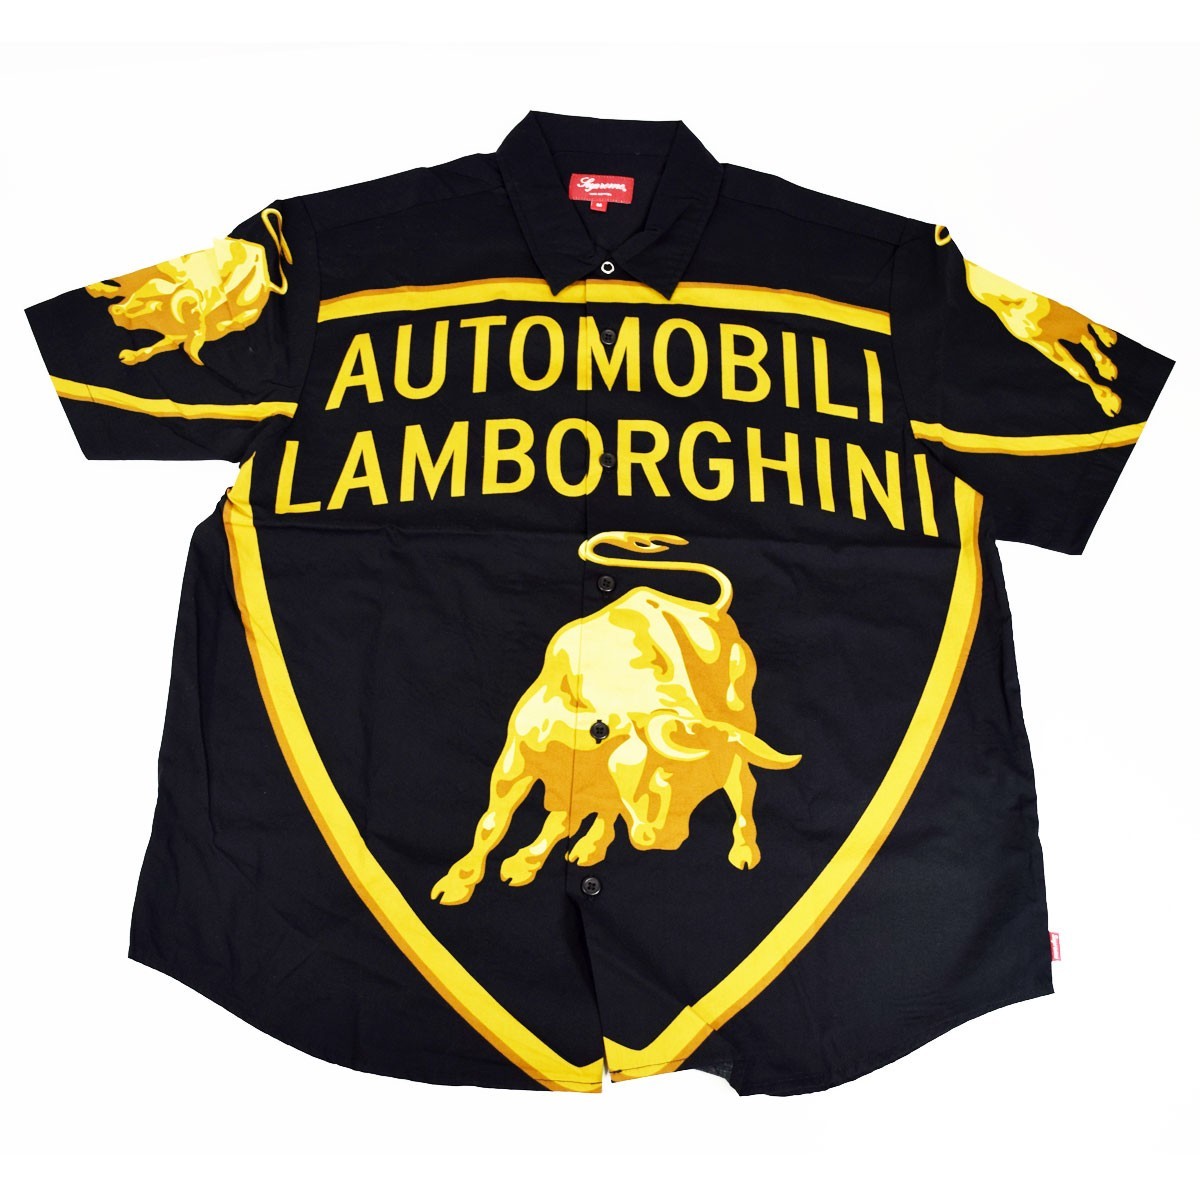 2020SS Supreme シュプリーム Automobili Lamborghini S/S Shirt ランボルギーニ シャツ Mサイズ 100%コットン 32280411